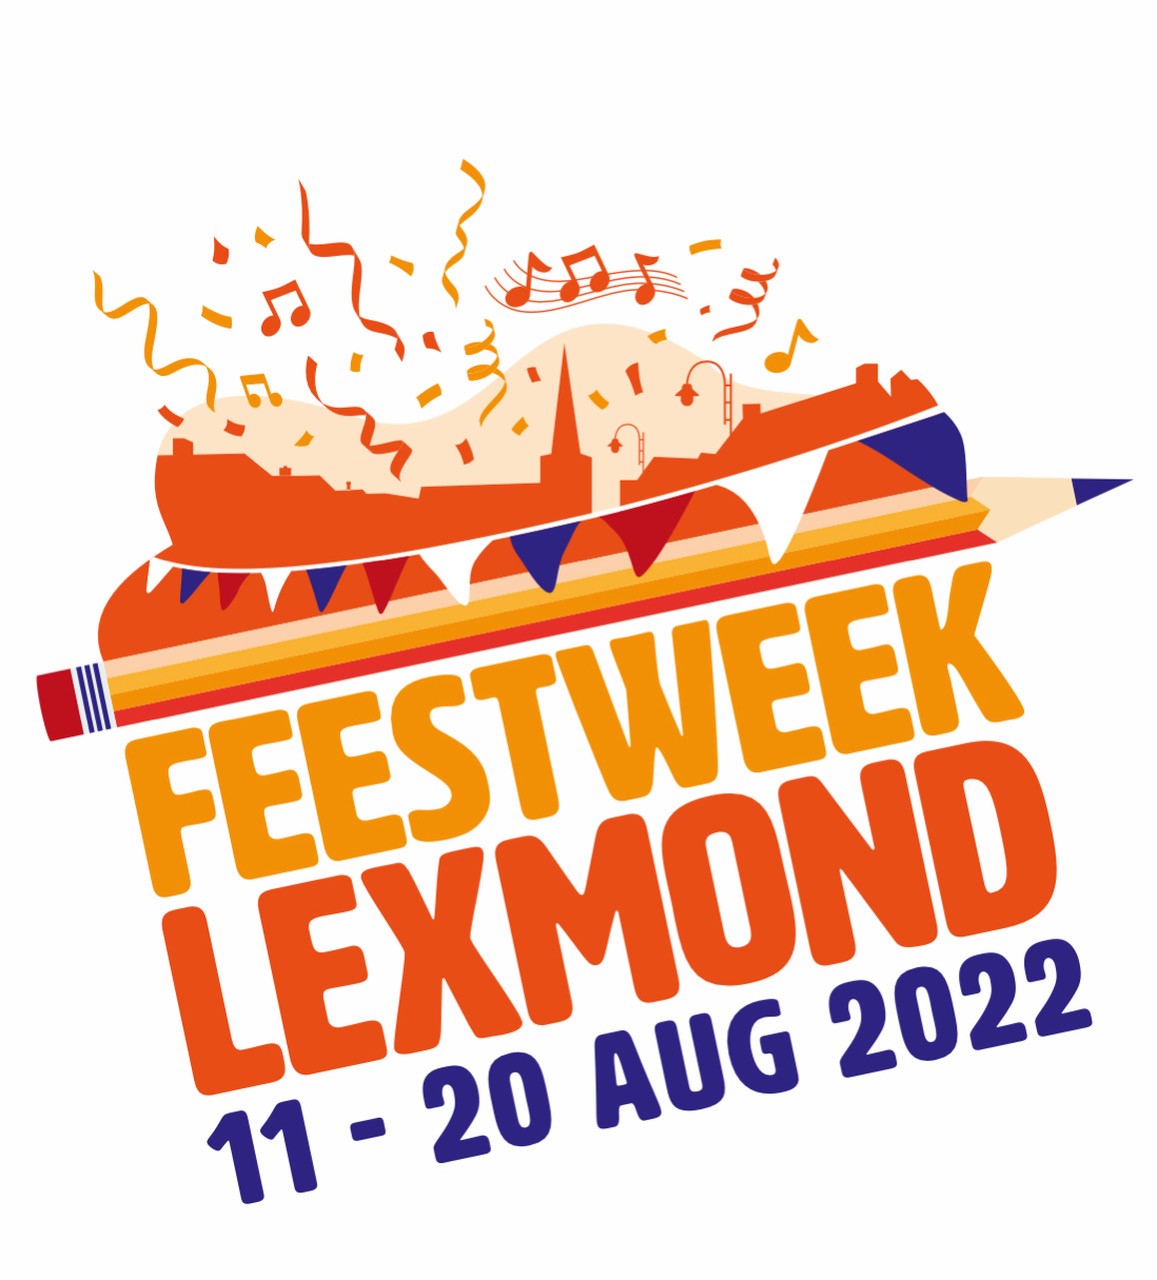 Feestweek Lexmond 2022